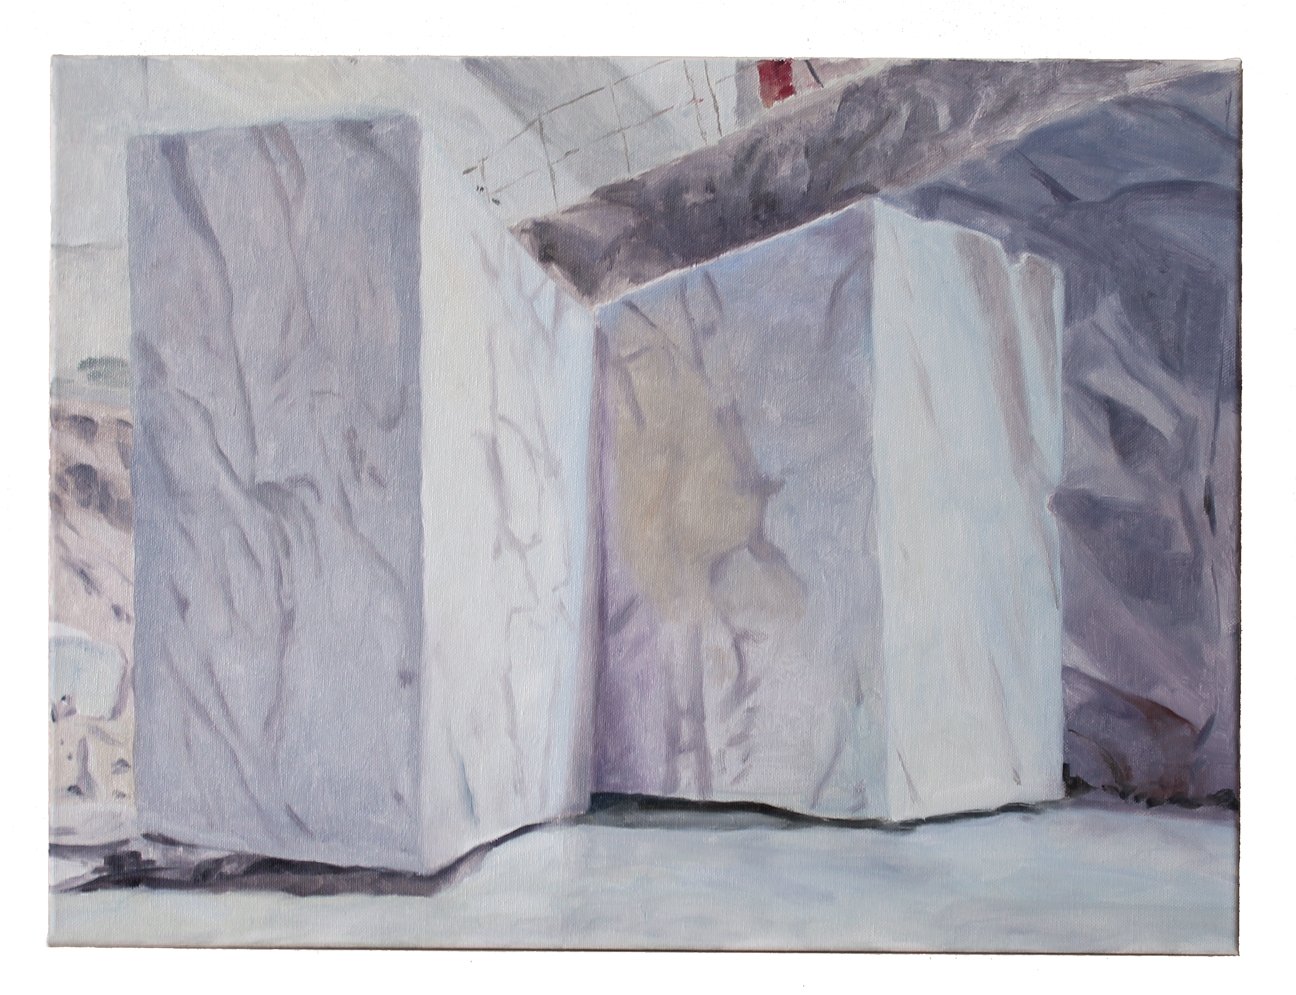  Carrara Marble Mines  2020  oil on canvas  18 x 24 in. 